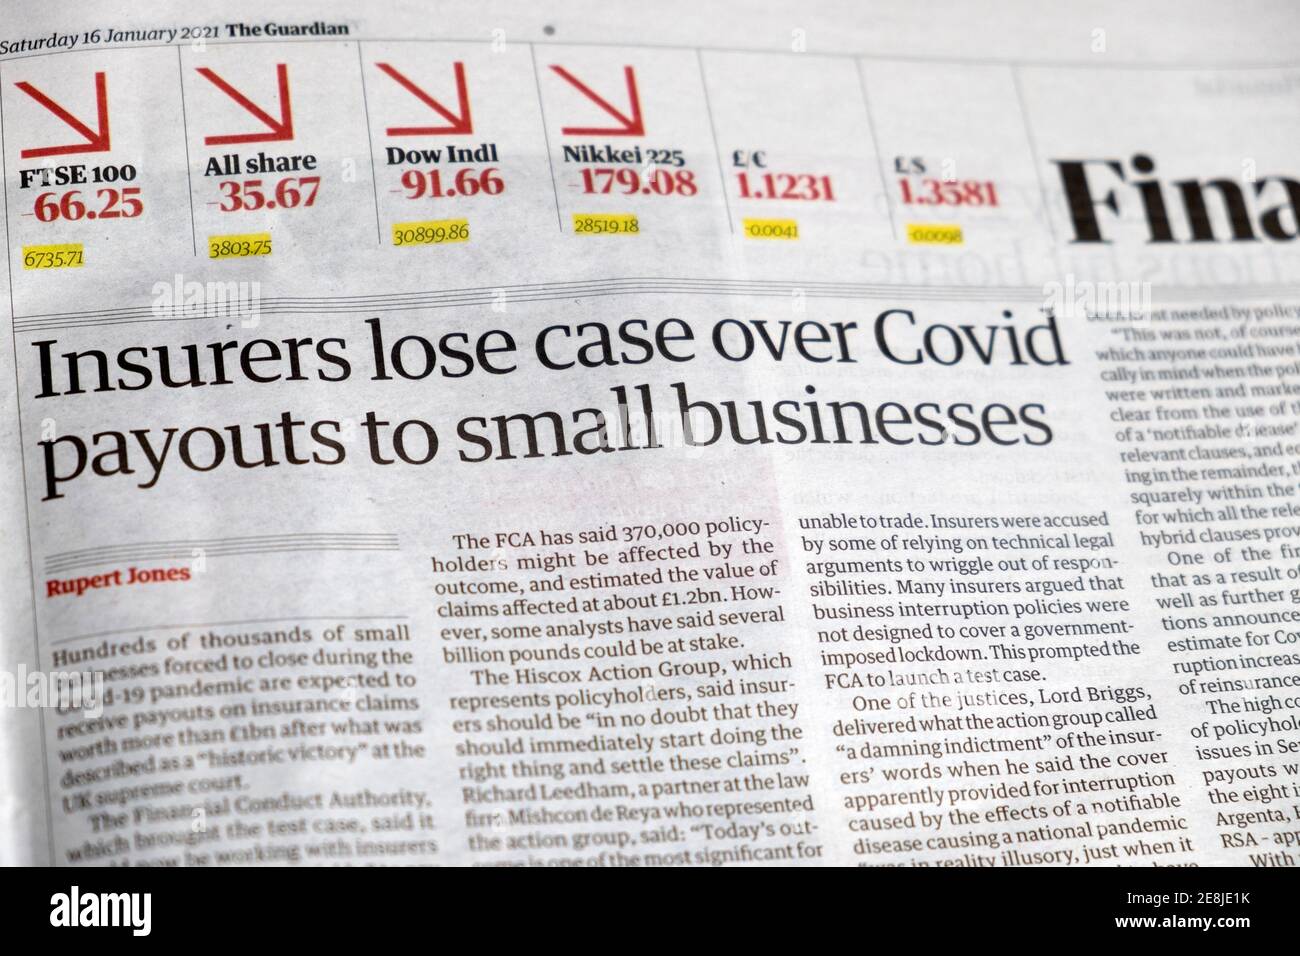 'Insurers lose case over Covid payouts to small businesses' Guardian news coronavirus covid 19 newspaper headline 16 January 2021 London UK Stock Photo